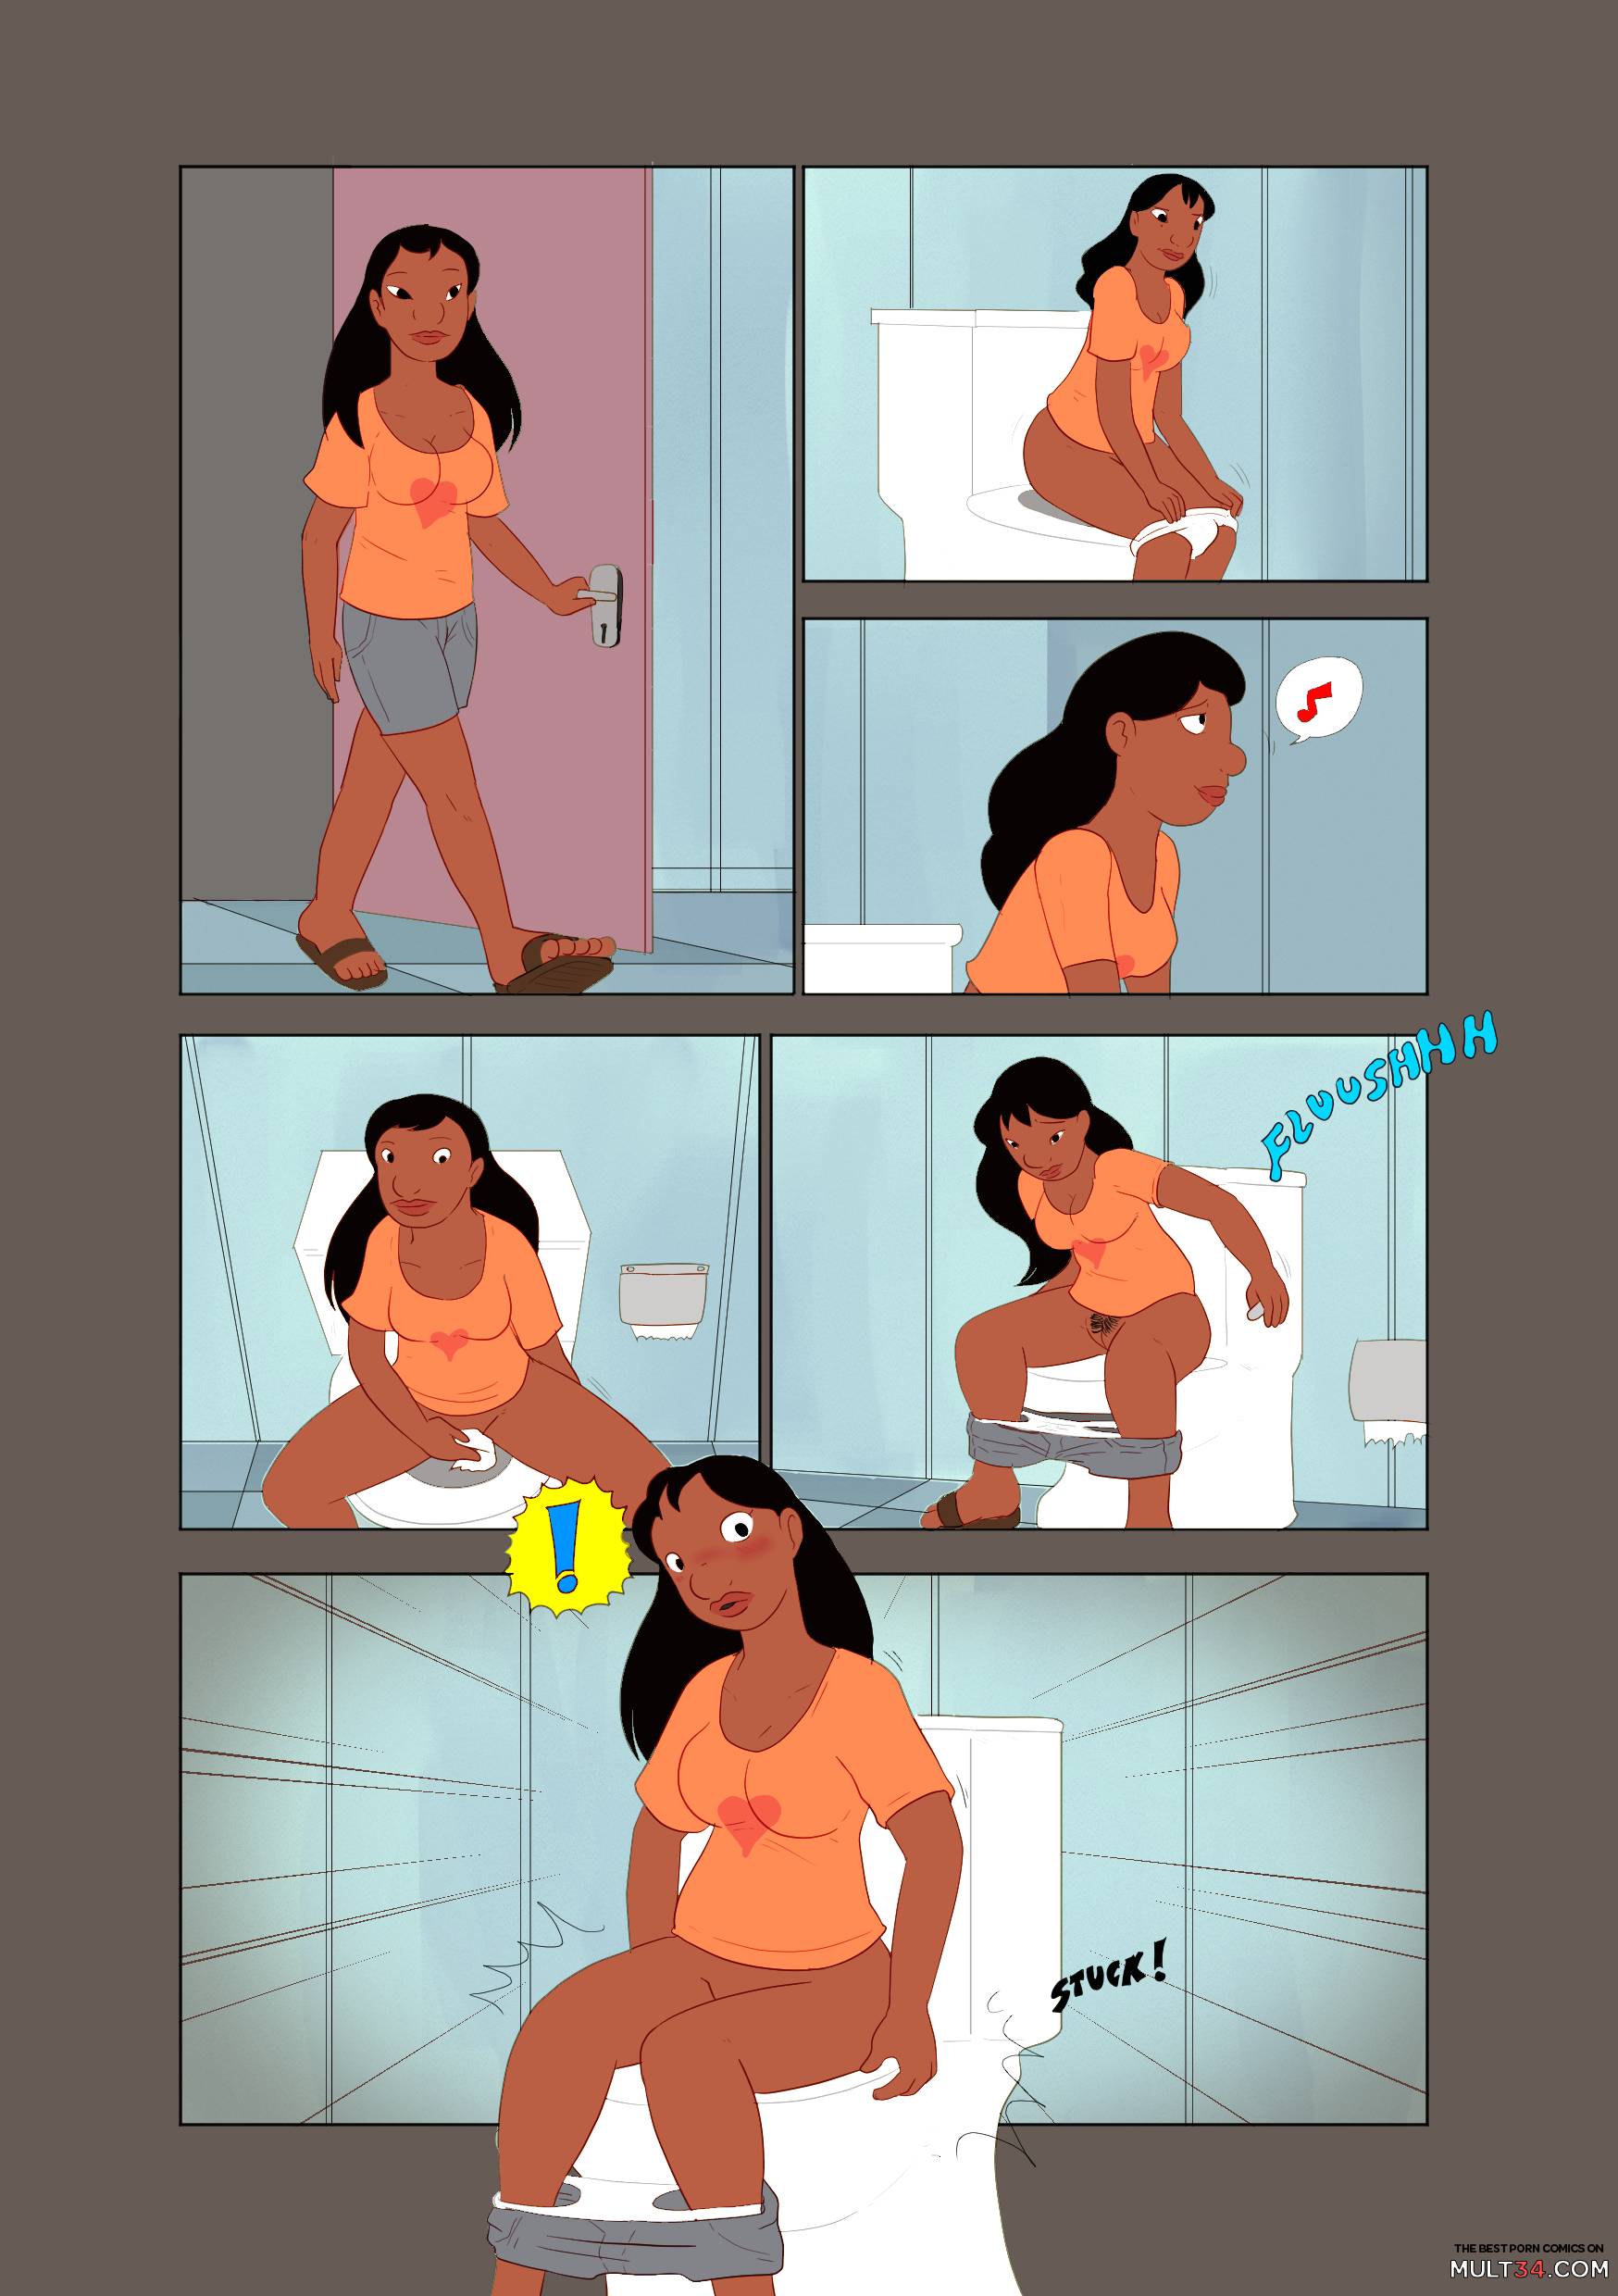 Xxx Nani Com - Nani and Stitch porn comic - the best cartoon porn comics, Rule 34 | MULT34